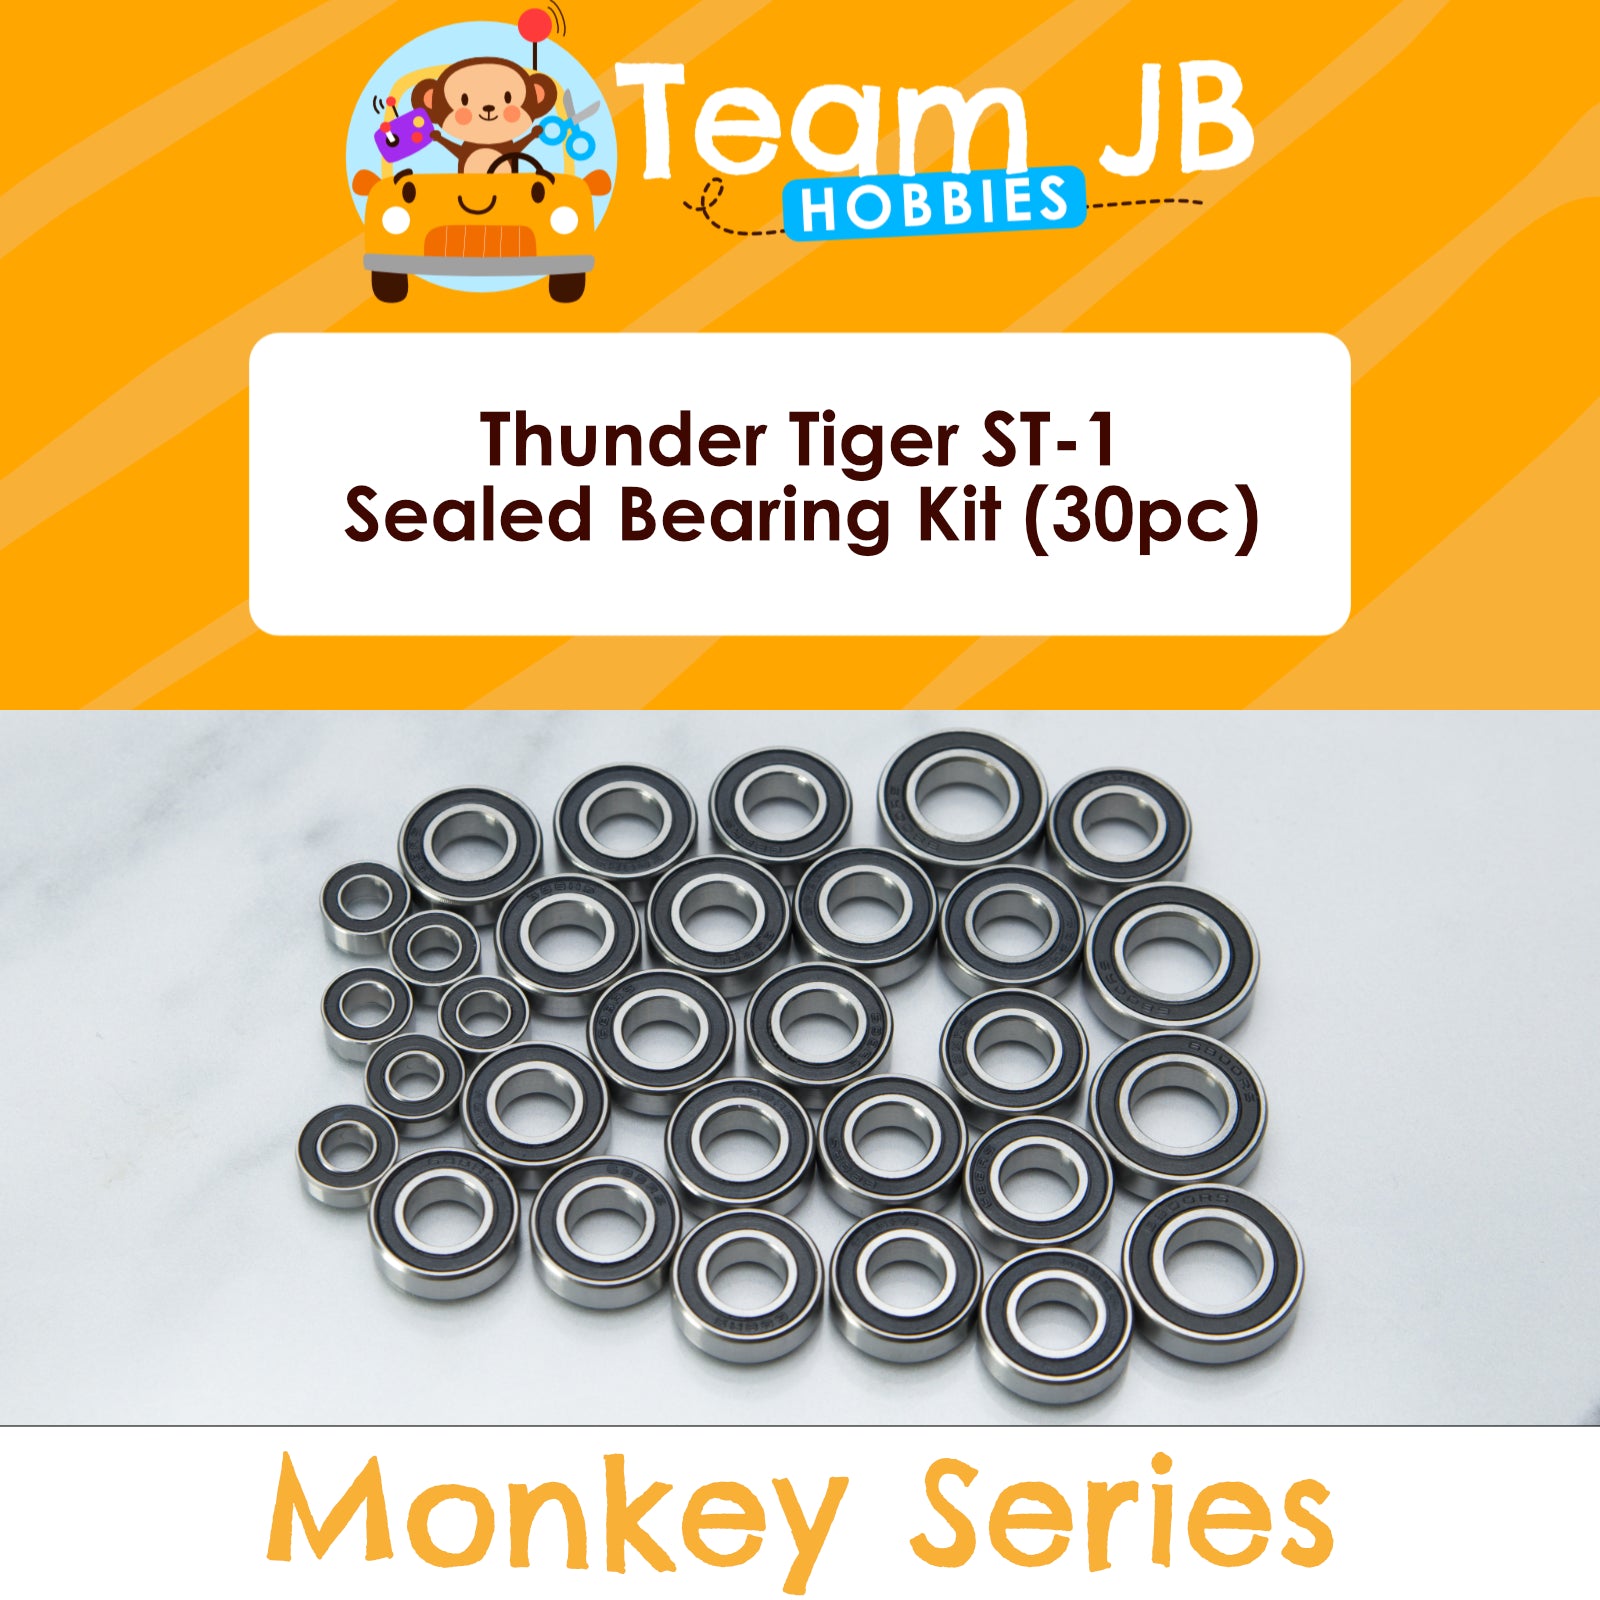 Thunder Tiger ST-1 - Sealed Bearing Kit